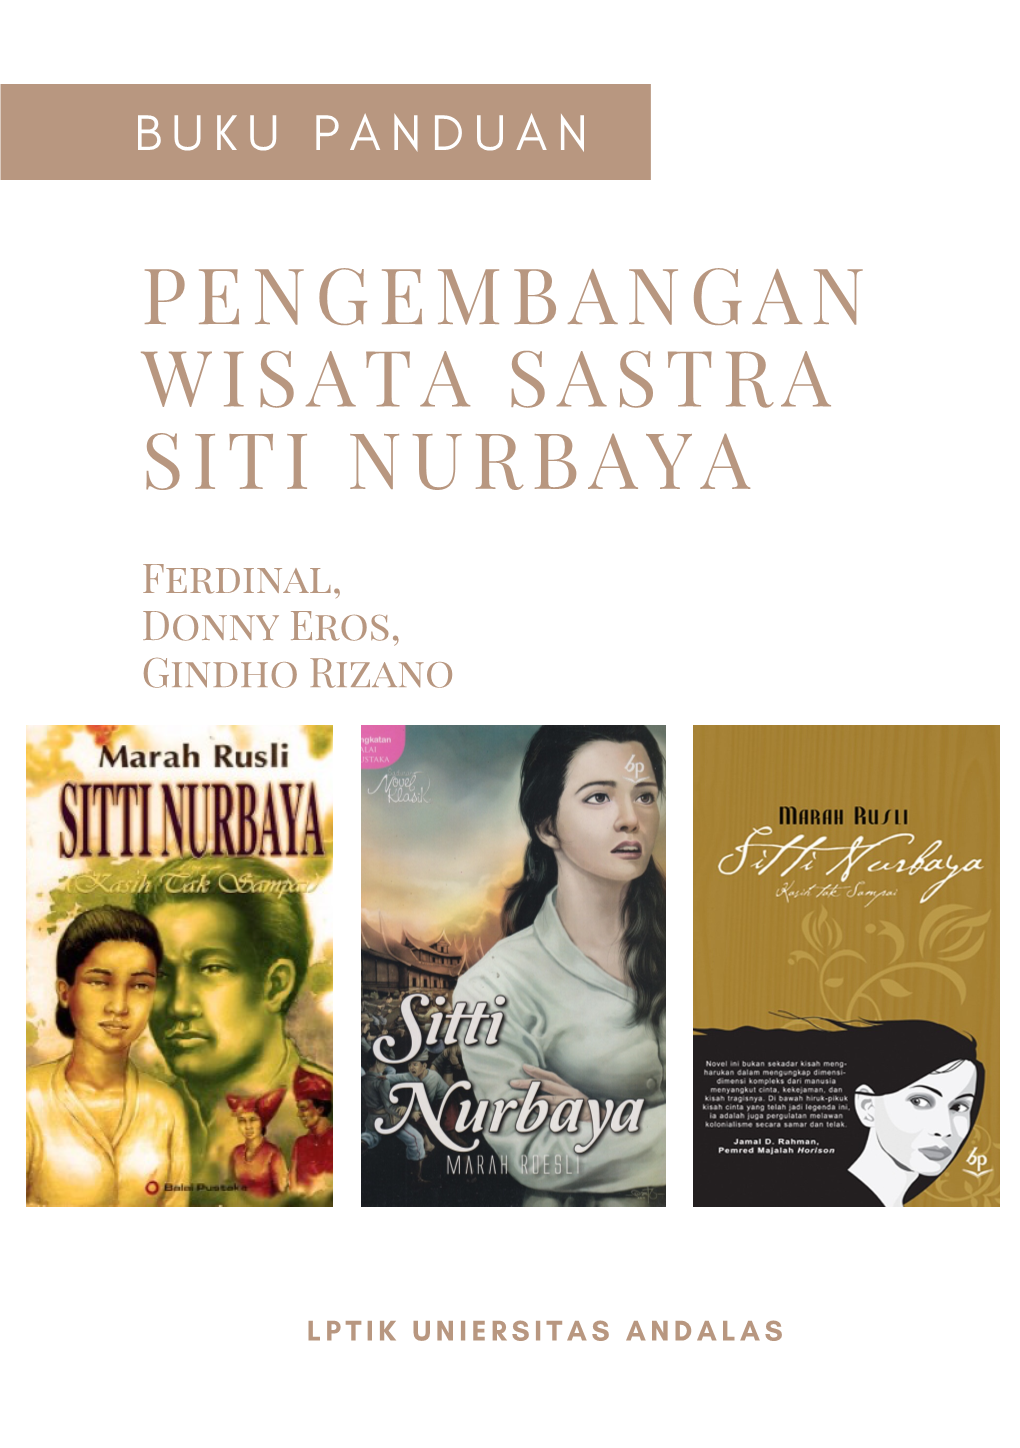 Pengembangan Wisata Sastra Siti Nurbaya